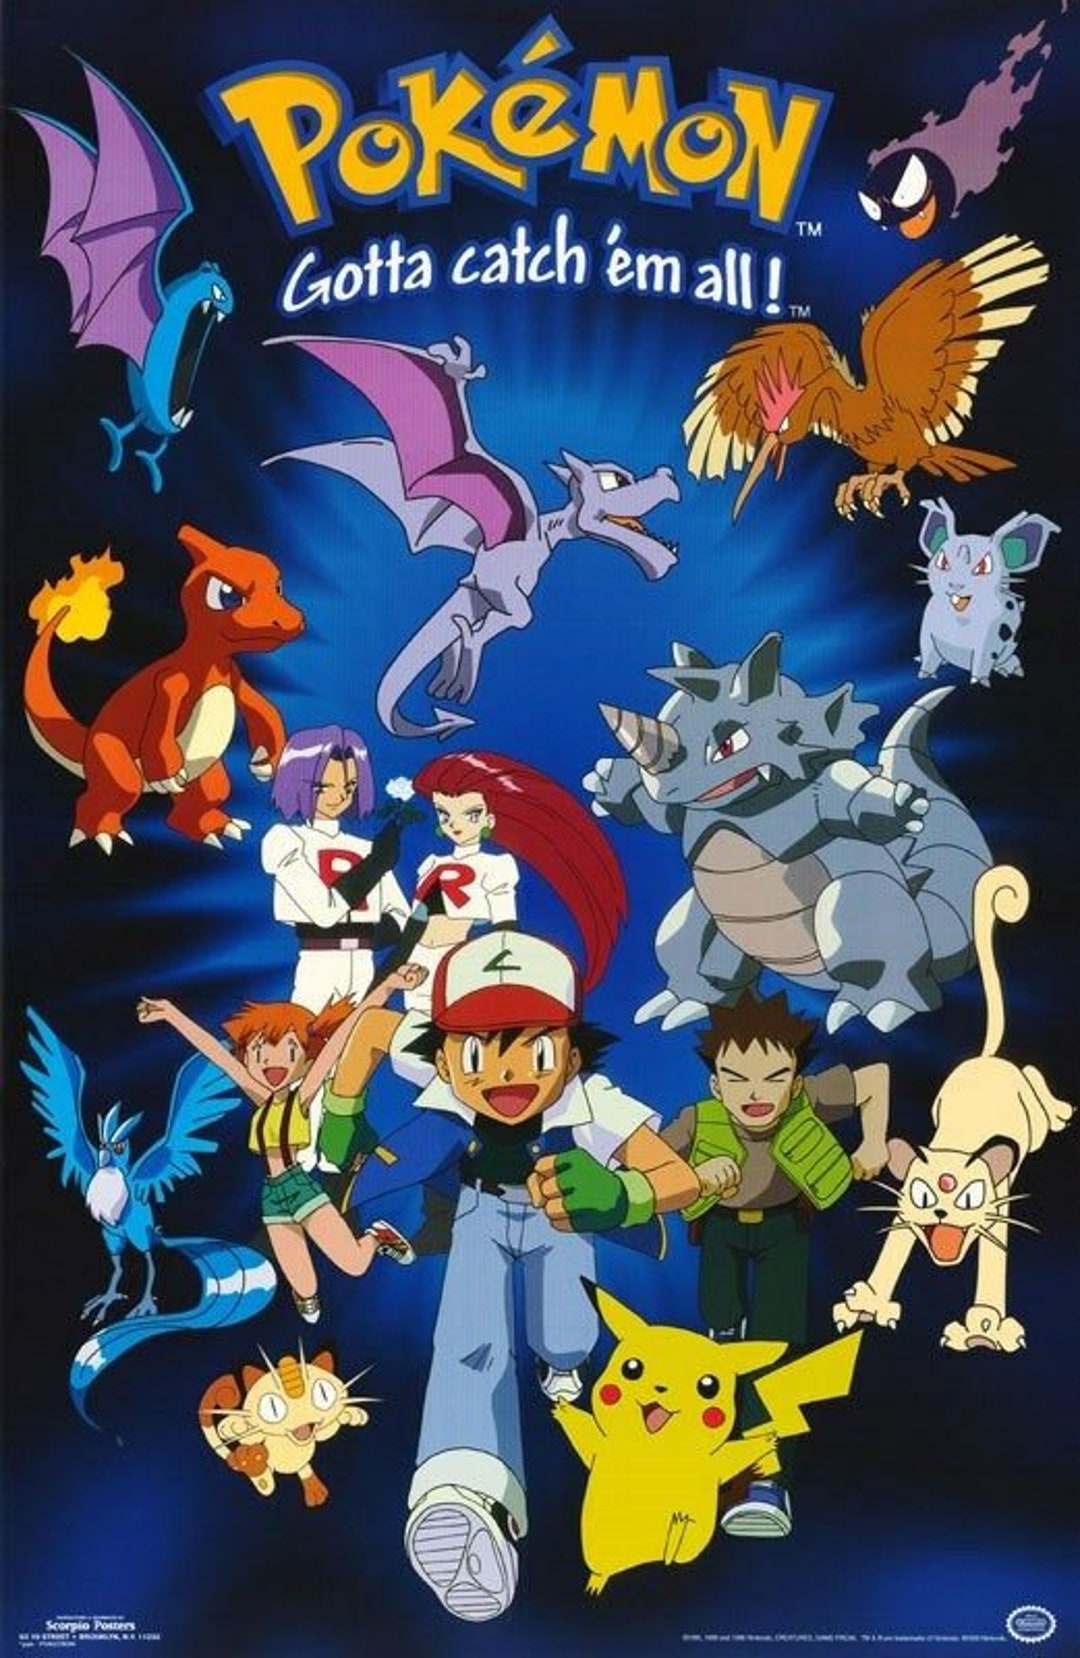 RARE Original Vintage 1995 Pokemon Cartoon TV Show Poster 